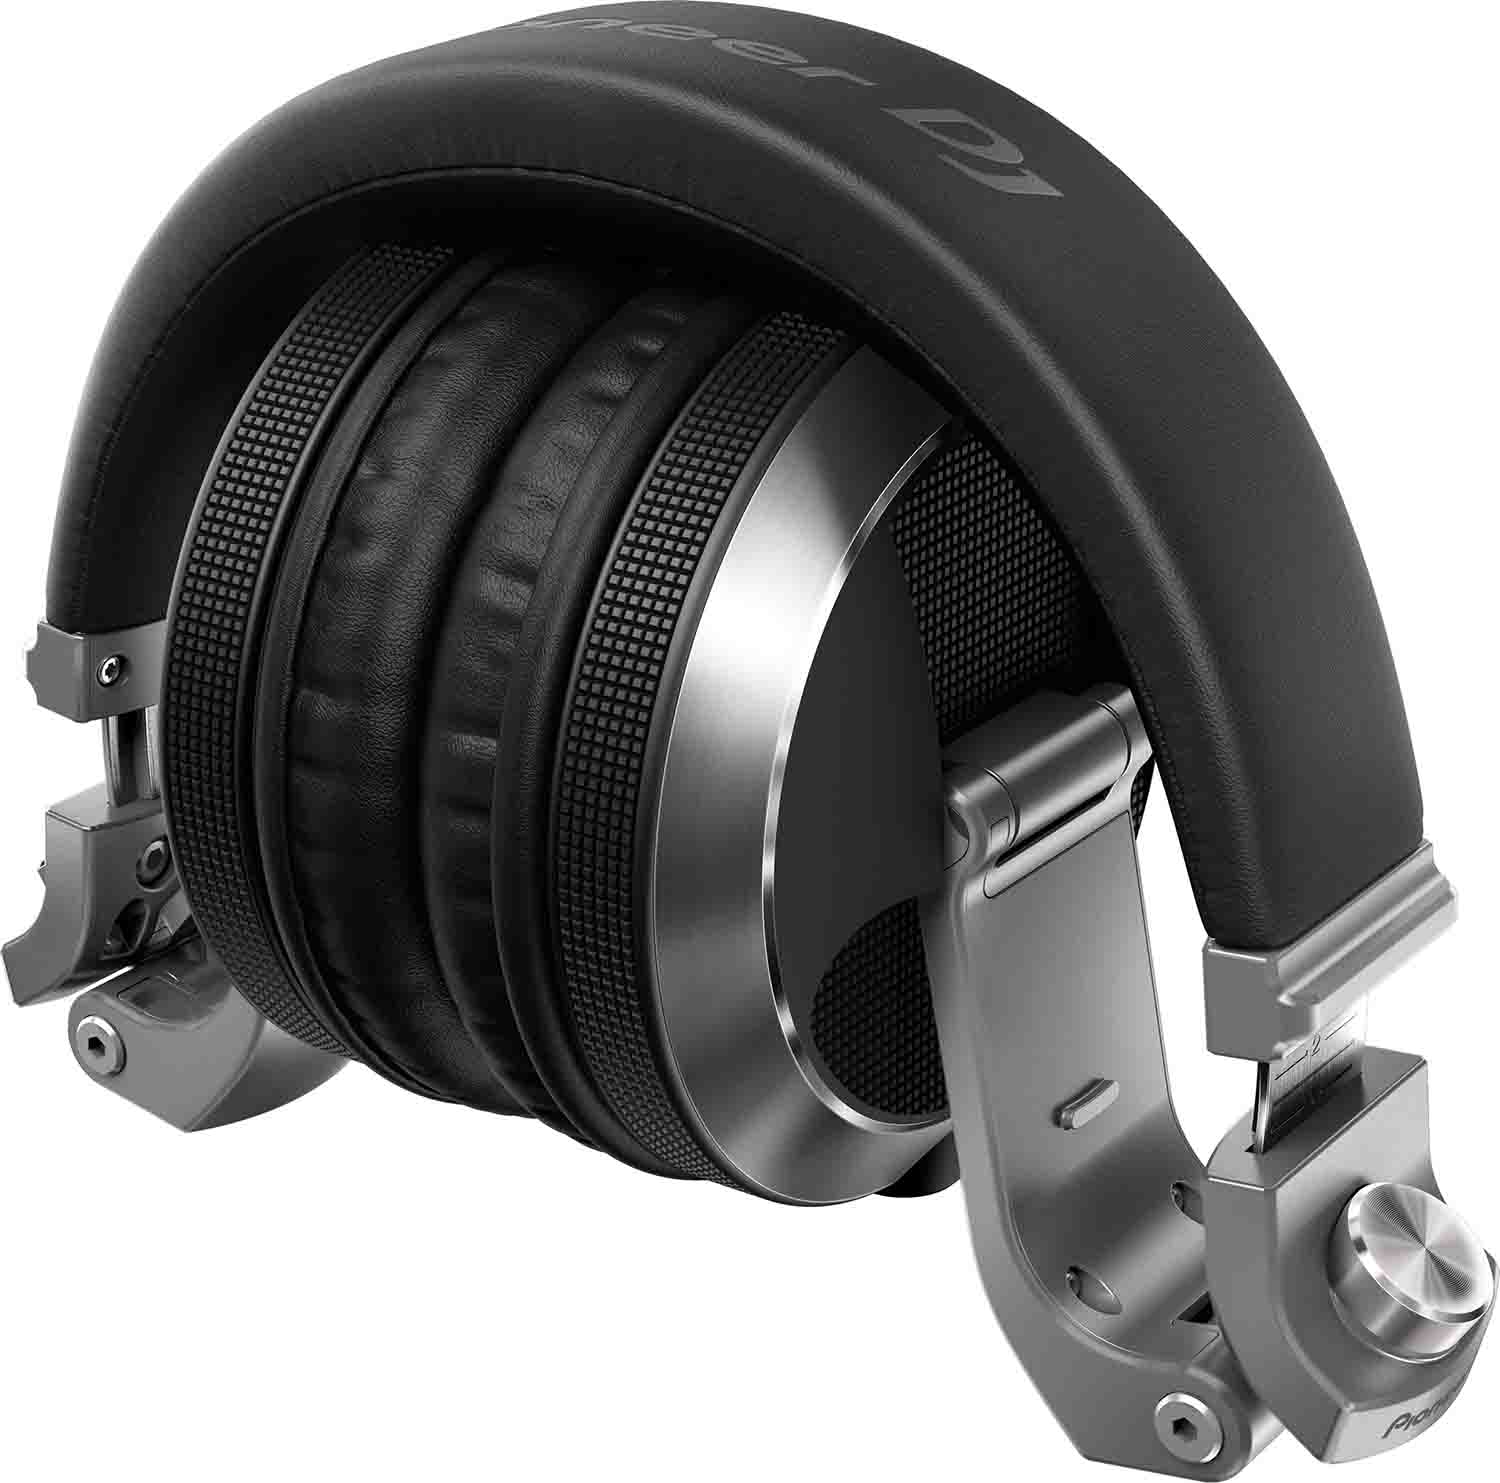 B-Stock: Pioneer DJ HDJ-X7-S Professional Over-Ear DJ Headphones - Silver - Hollywood DJ